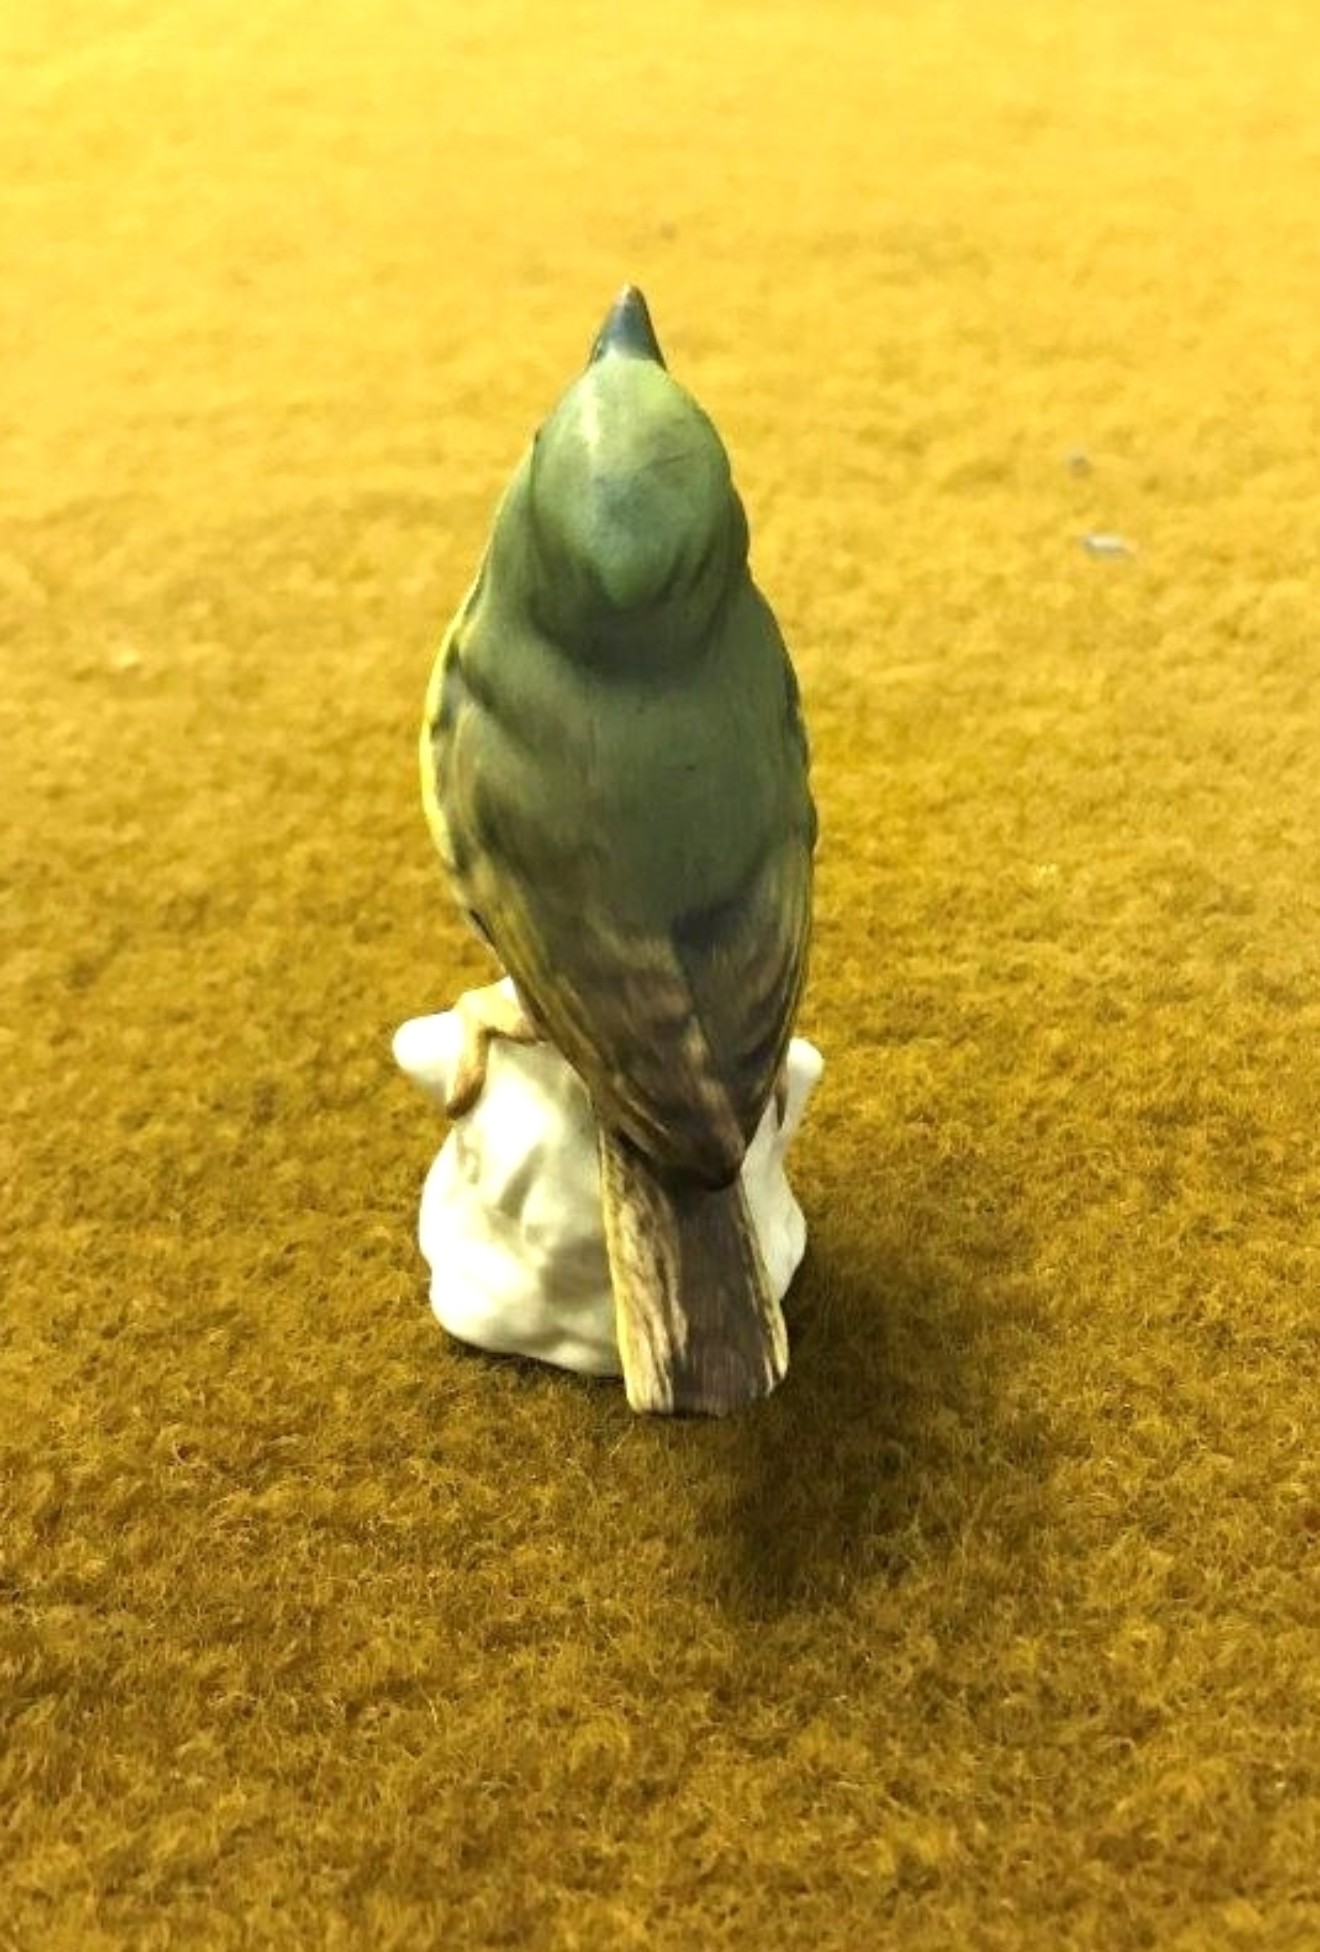 Goebel "Wood Warbler" Figurine 38028